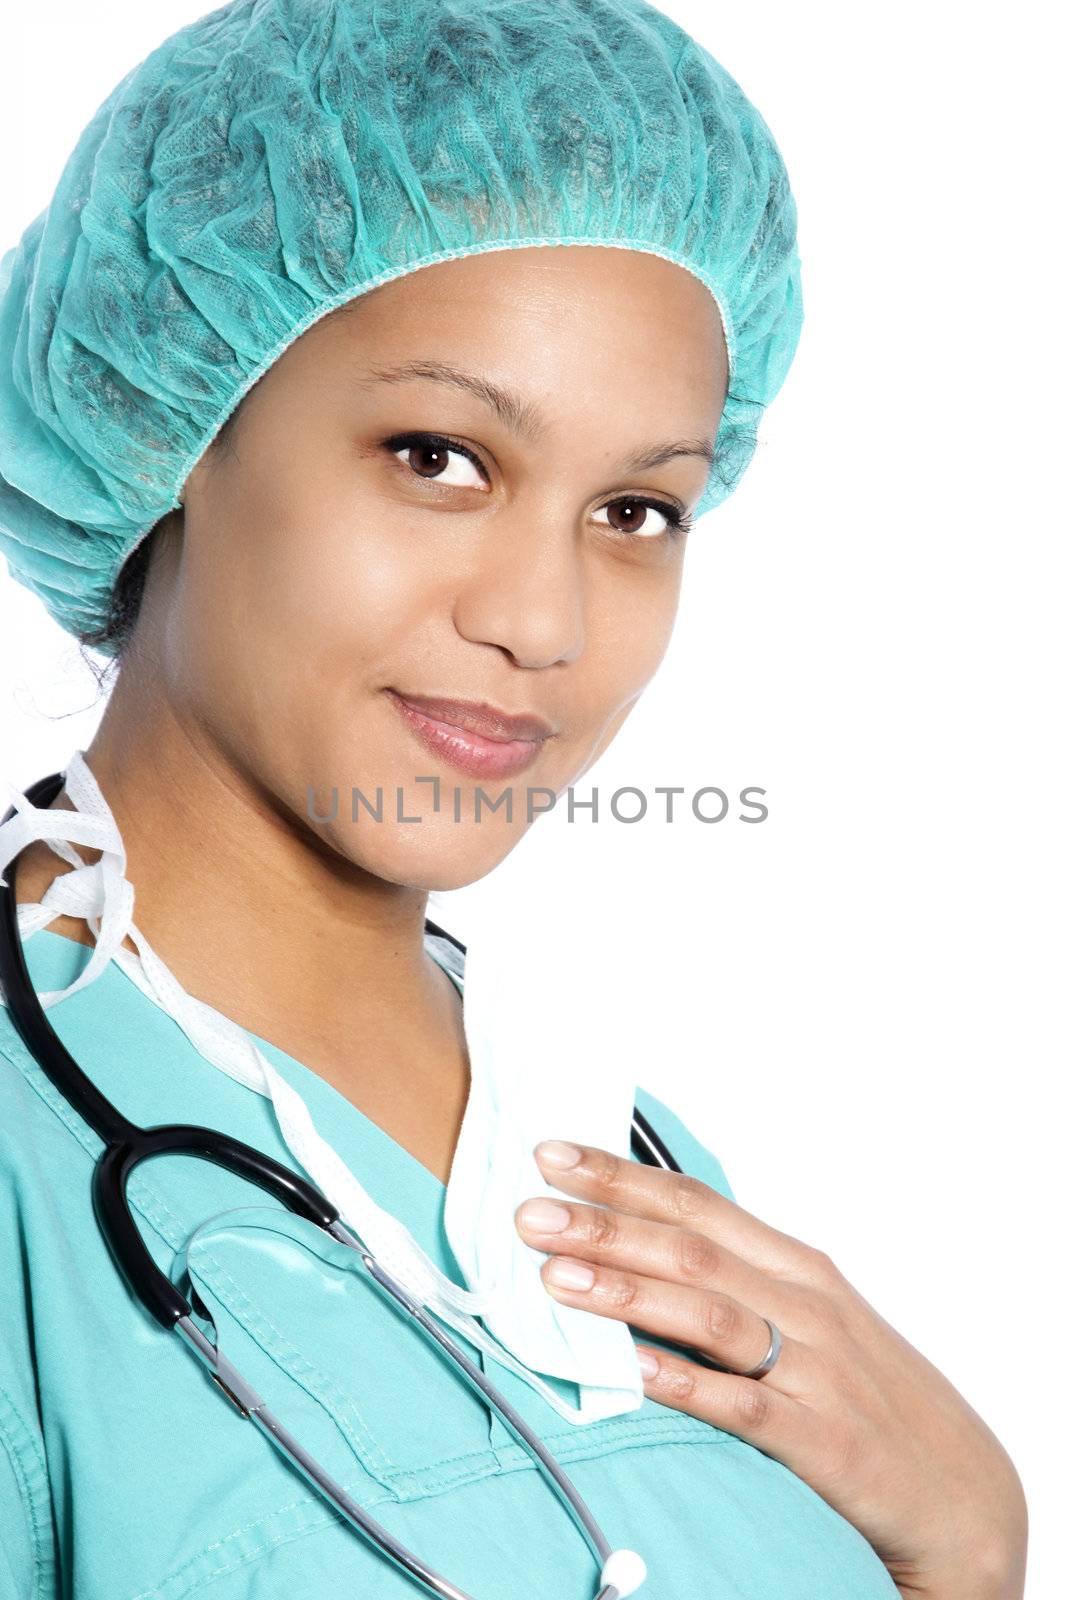 Beautiful female doctor/nurse by Farina6000